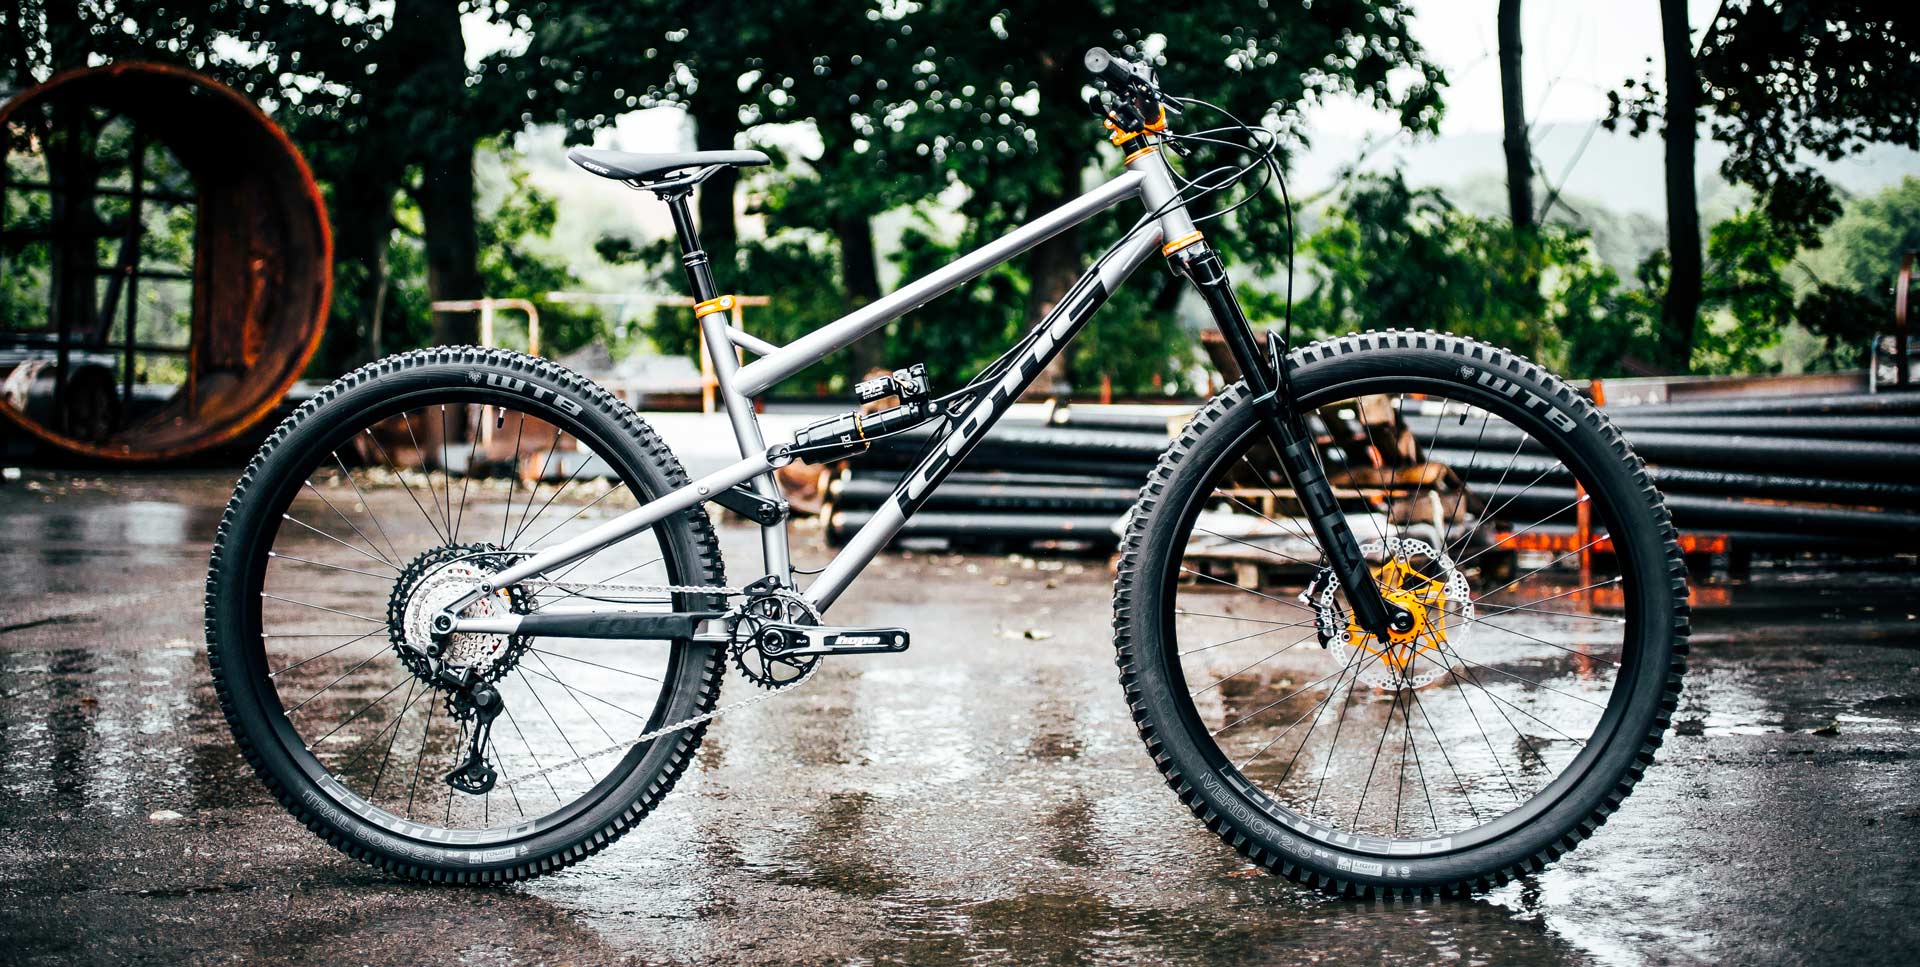 Cotic Jeht in Gloss Metal, steel full suspension mountain bike, 29 mountain bike, 140mm travel, reynolds 853, long geometry